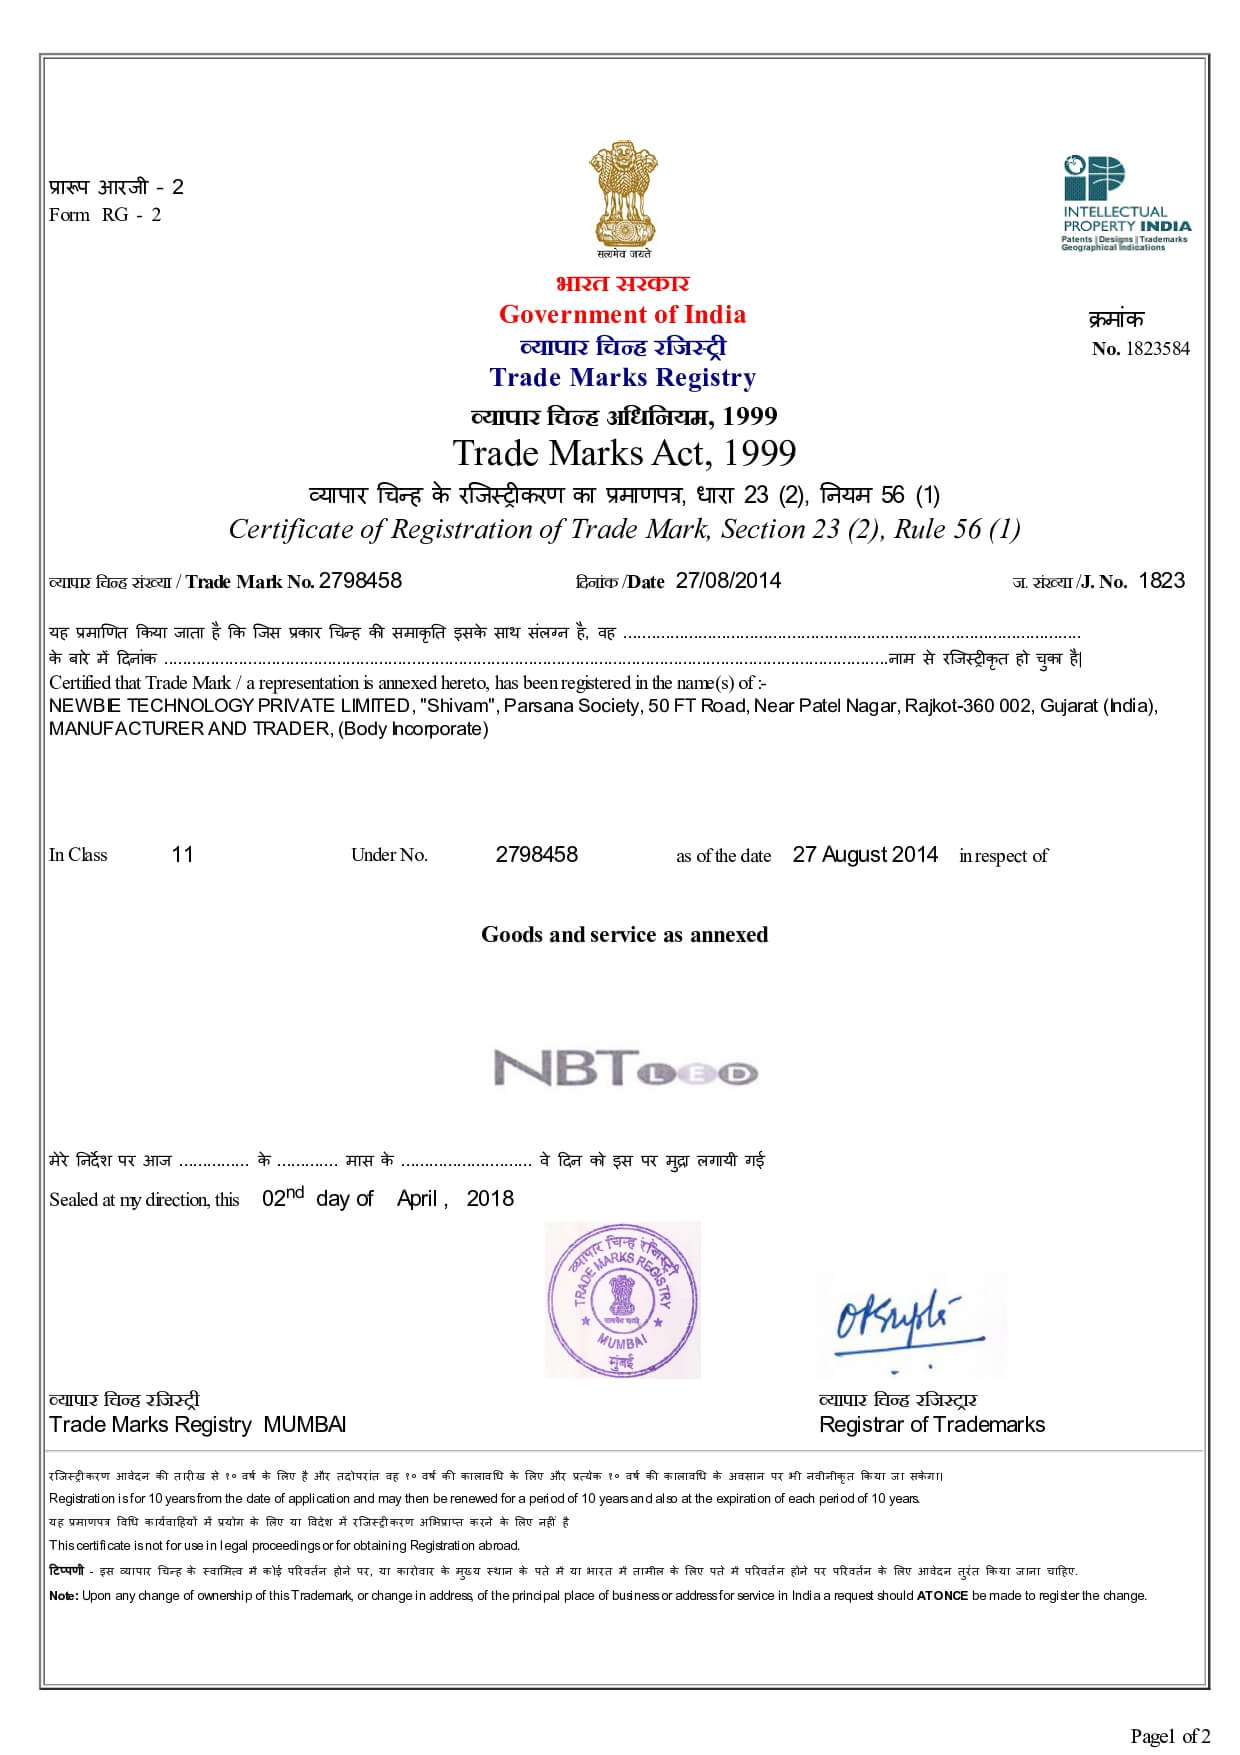 NBT-ISO-Certification-5